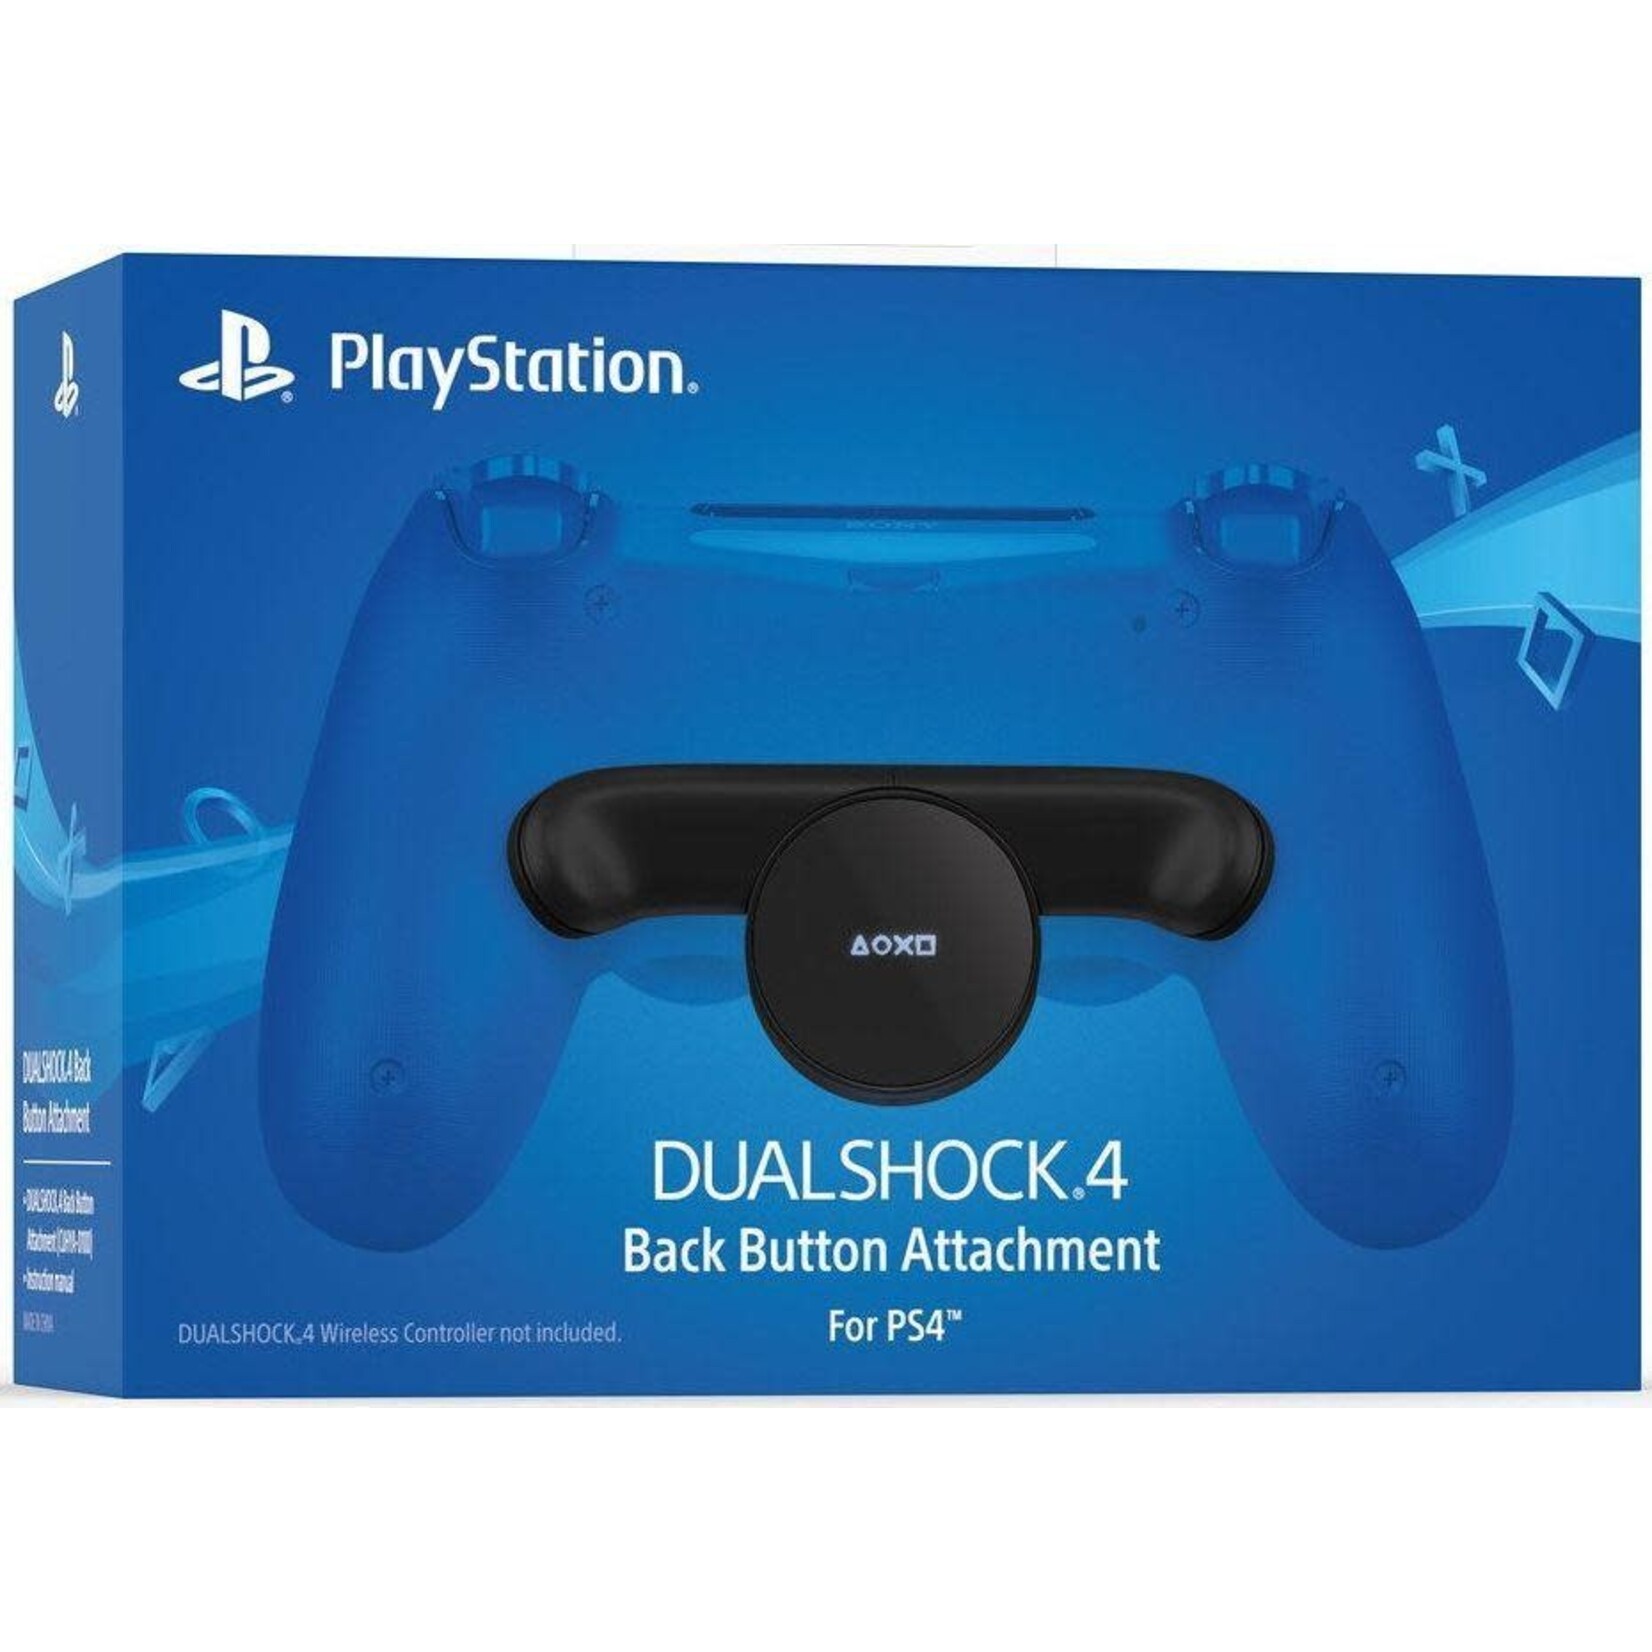 PS4 PS4 Back Button Attachment